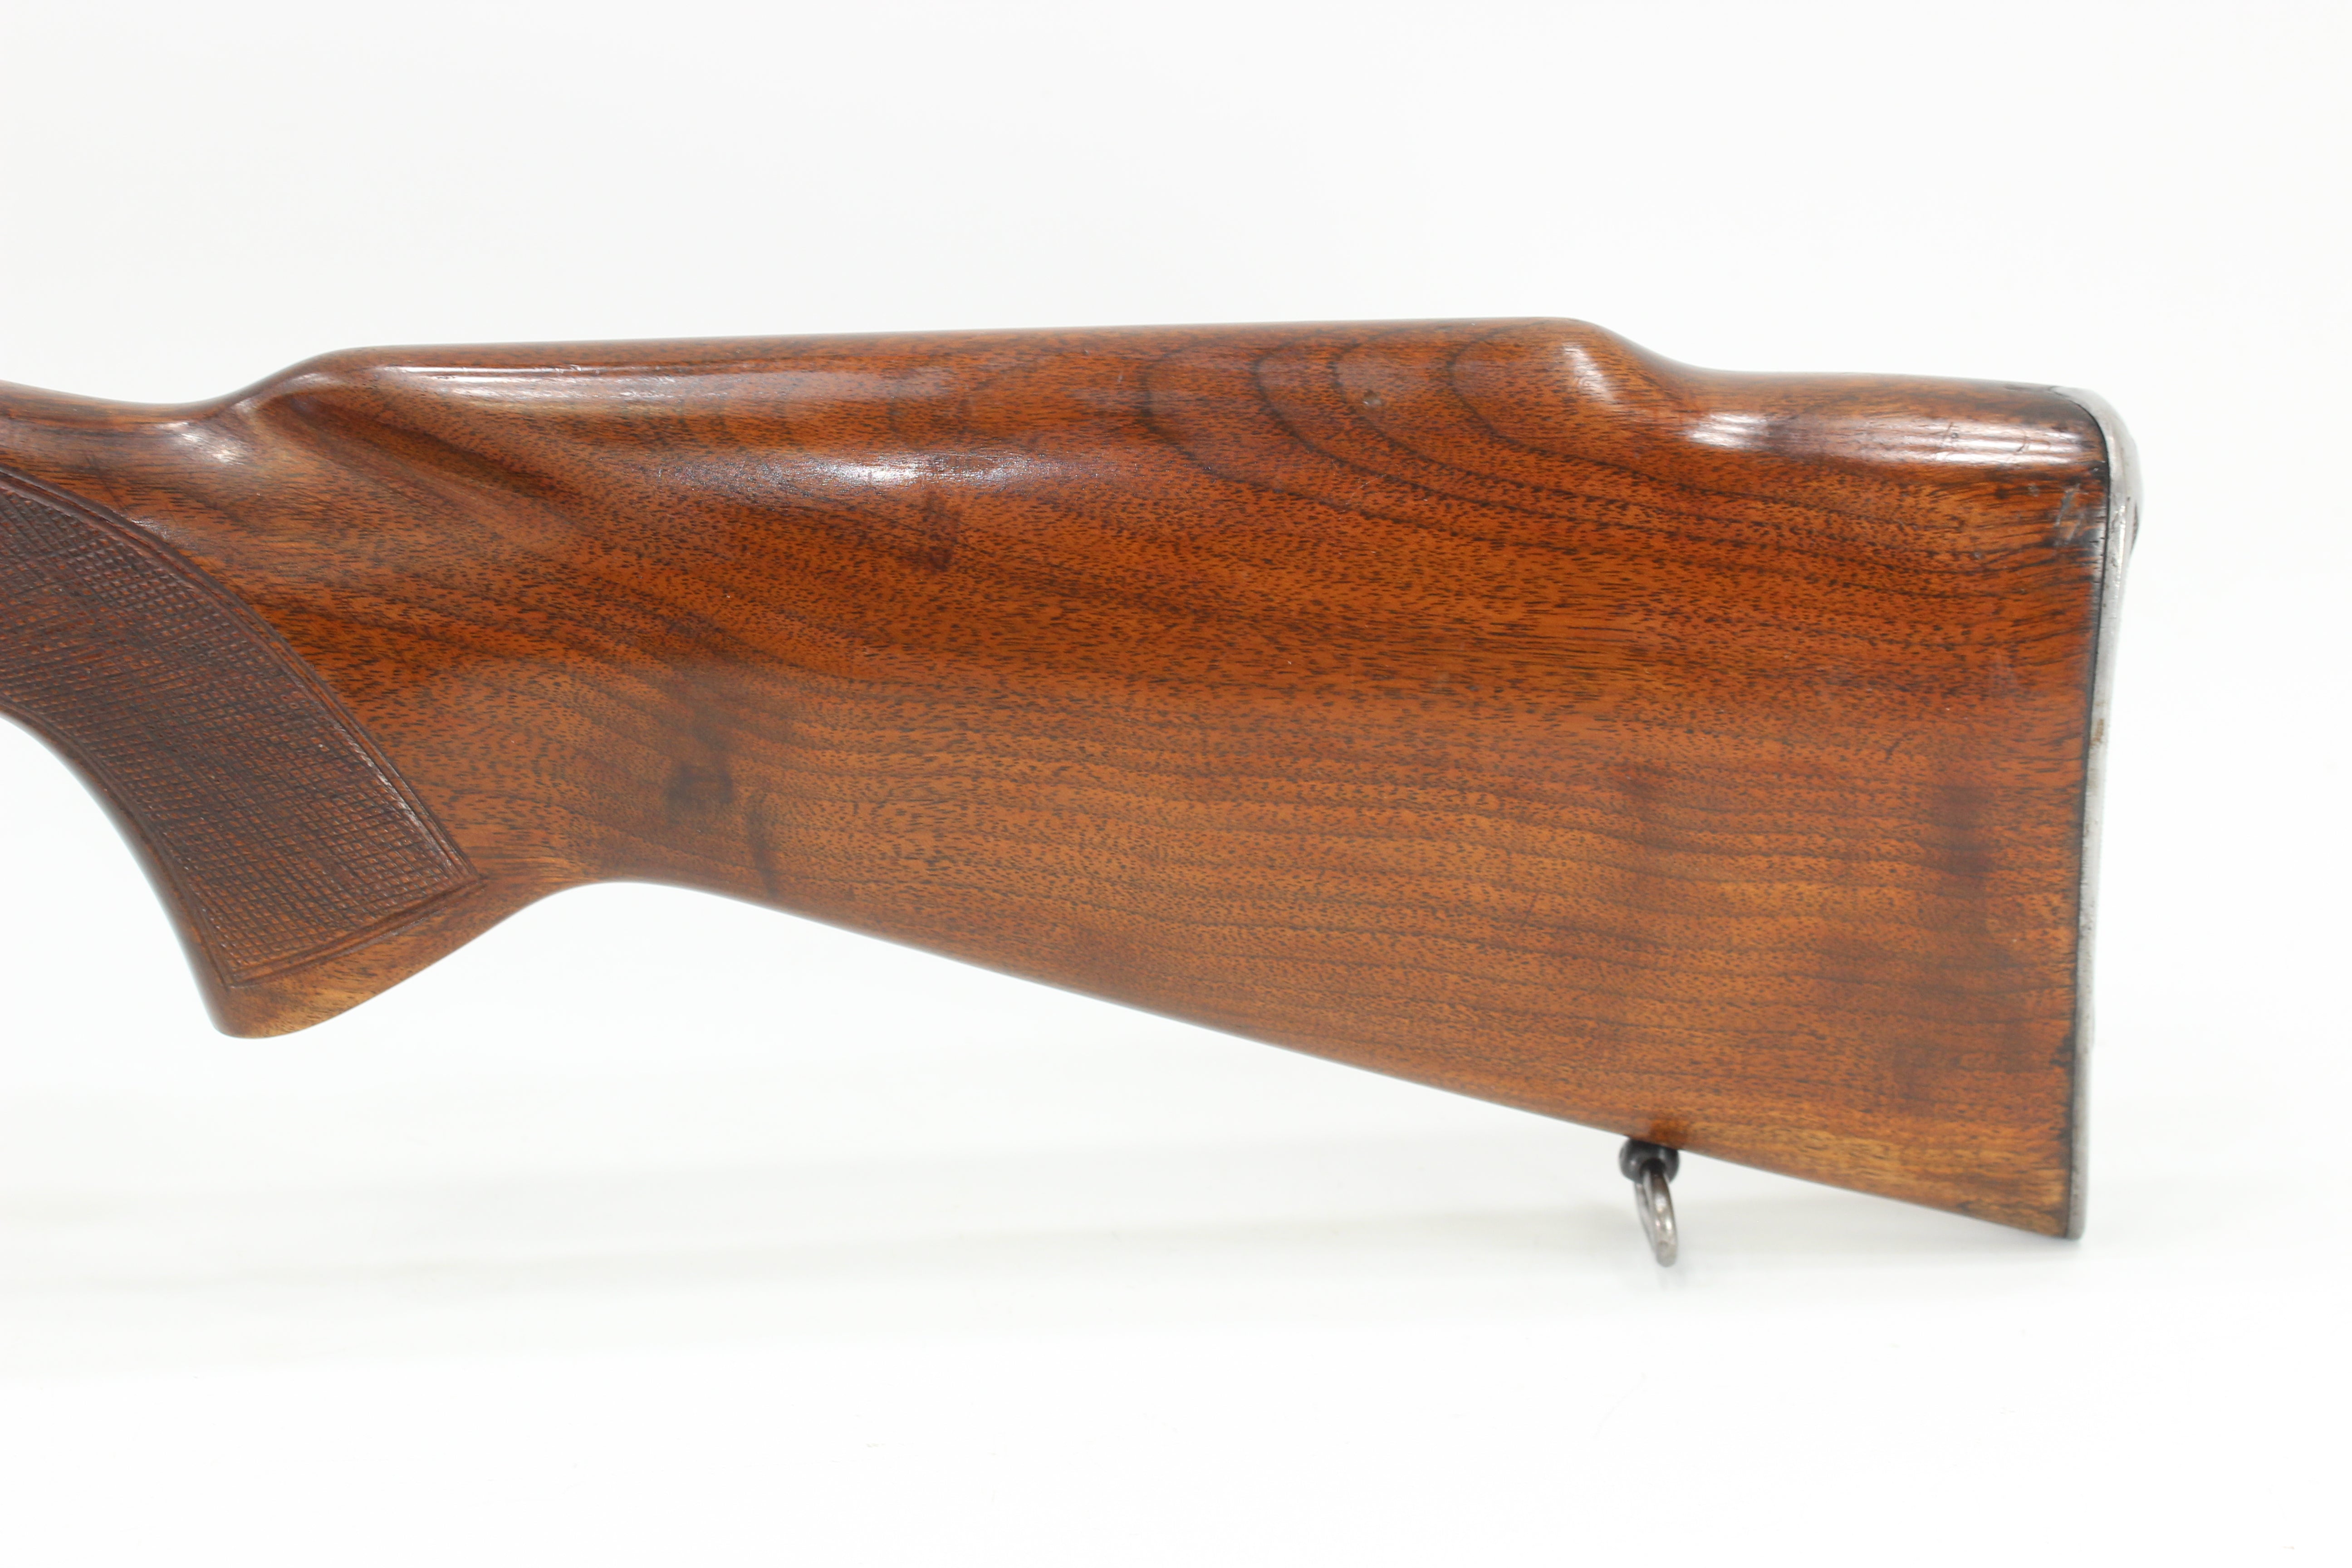 .30-06 Springfield Standard Rifle - 1953